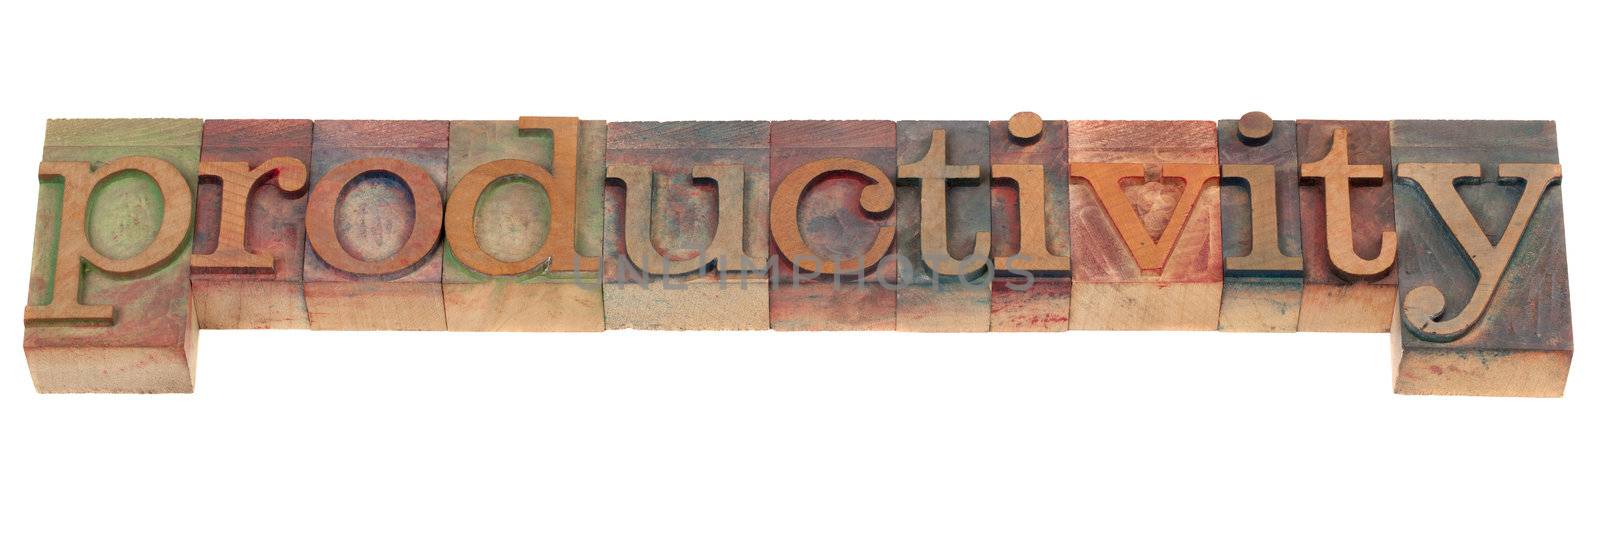 productivty concept - word spelled in vintage wooden letterpress printing blocks